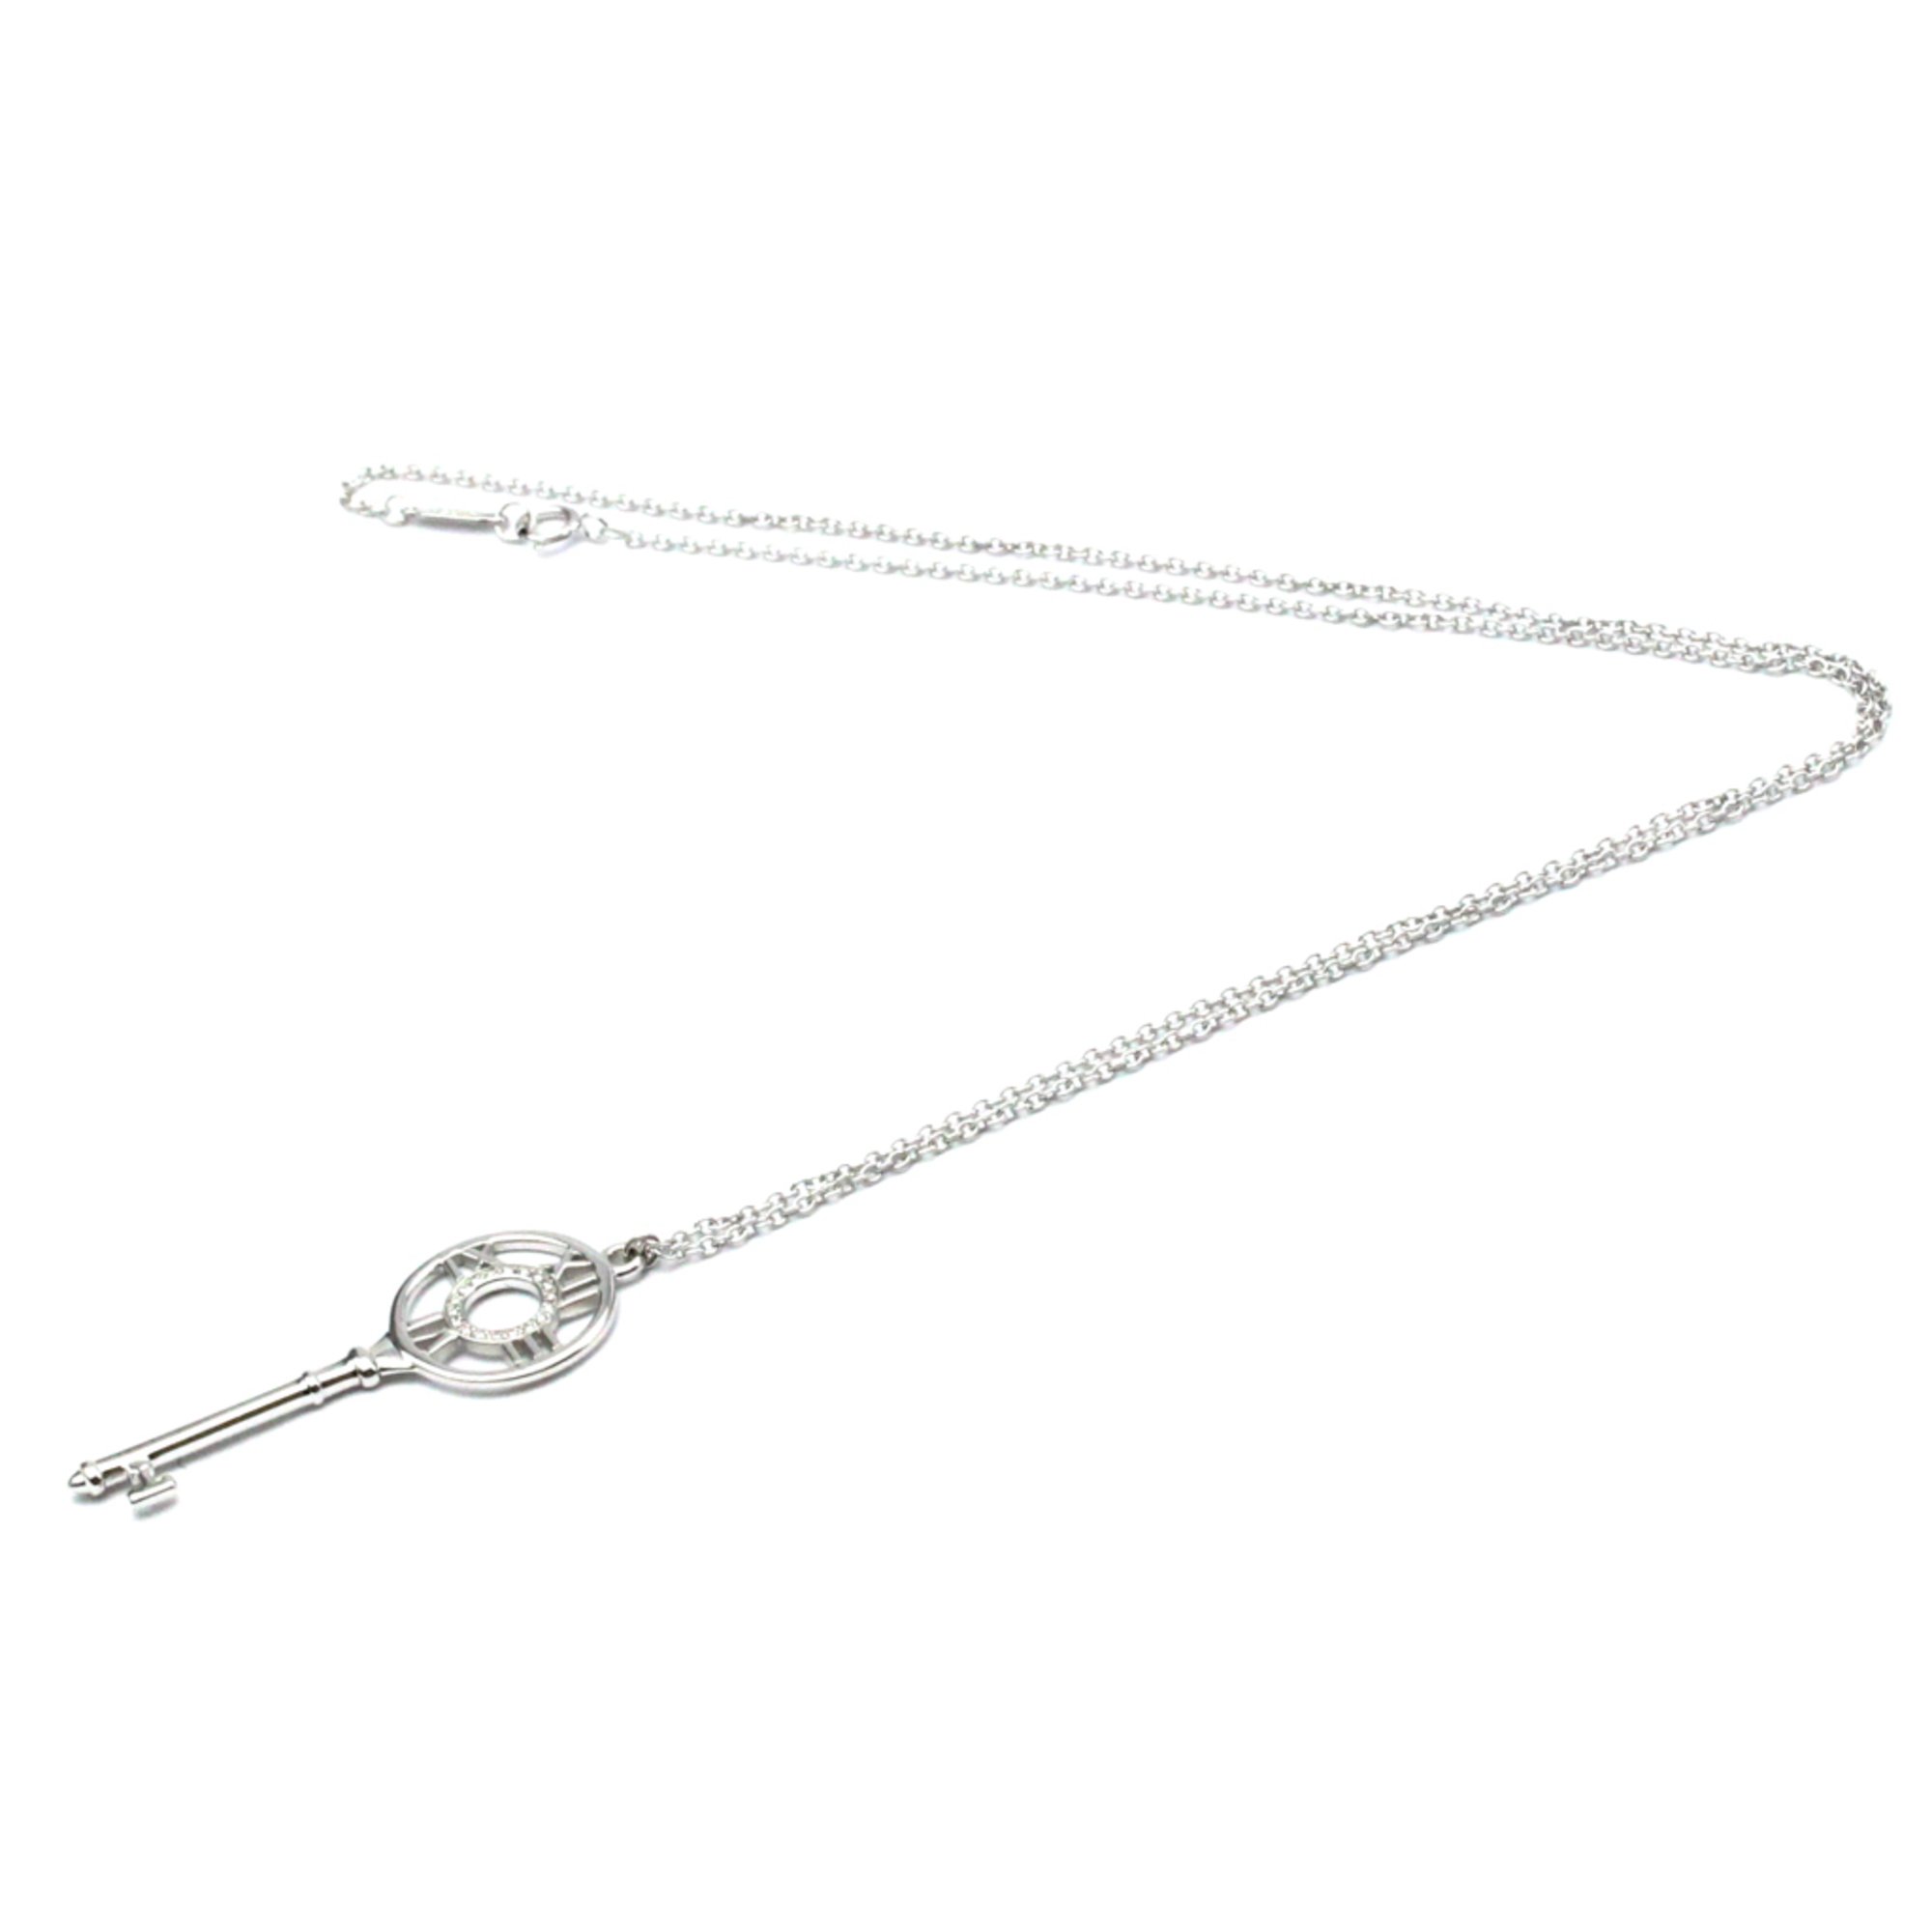 Tiffany Atlas Key Necklace White Gold (18K) Diamond Men,Women Fashion Pendant Necklace (Silver)